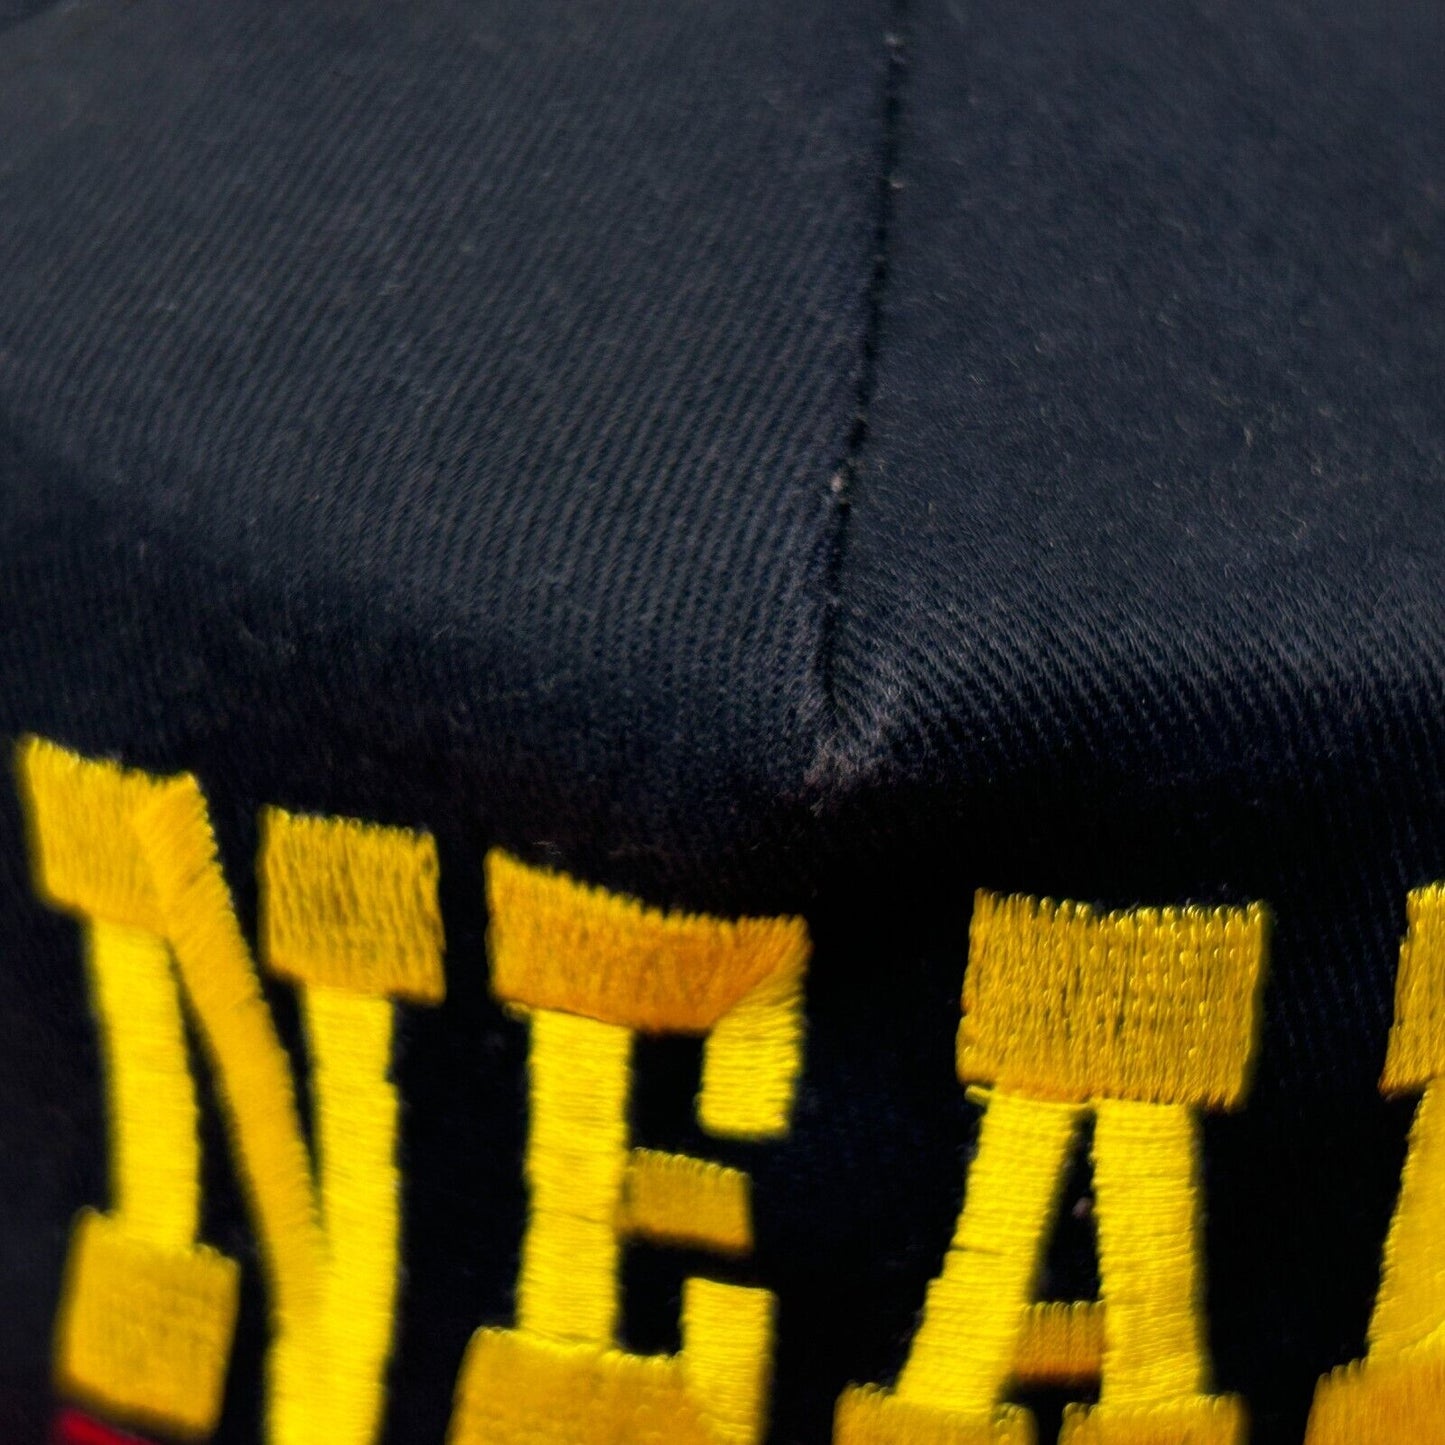 Neal McCoy Snapback Hat Vintage 90s Country Western Black 5 Panel Baseball Cap